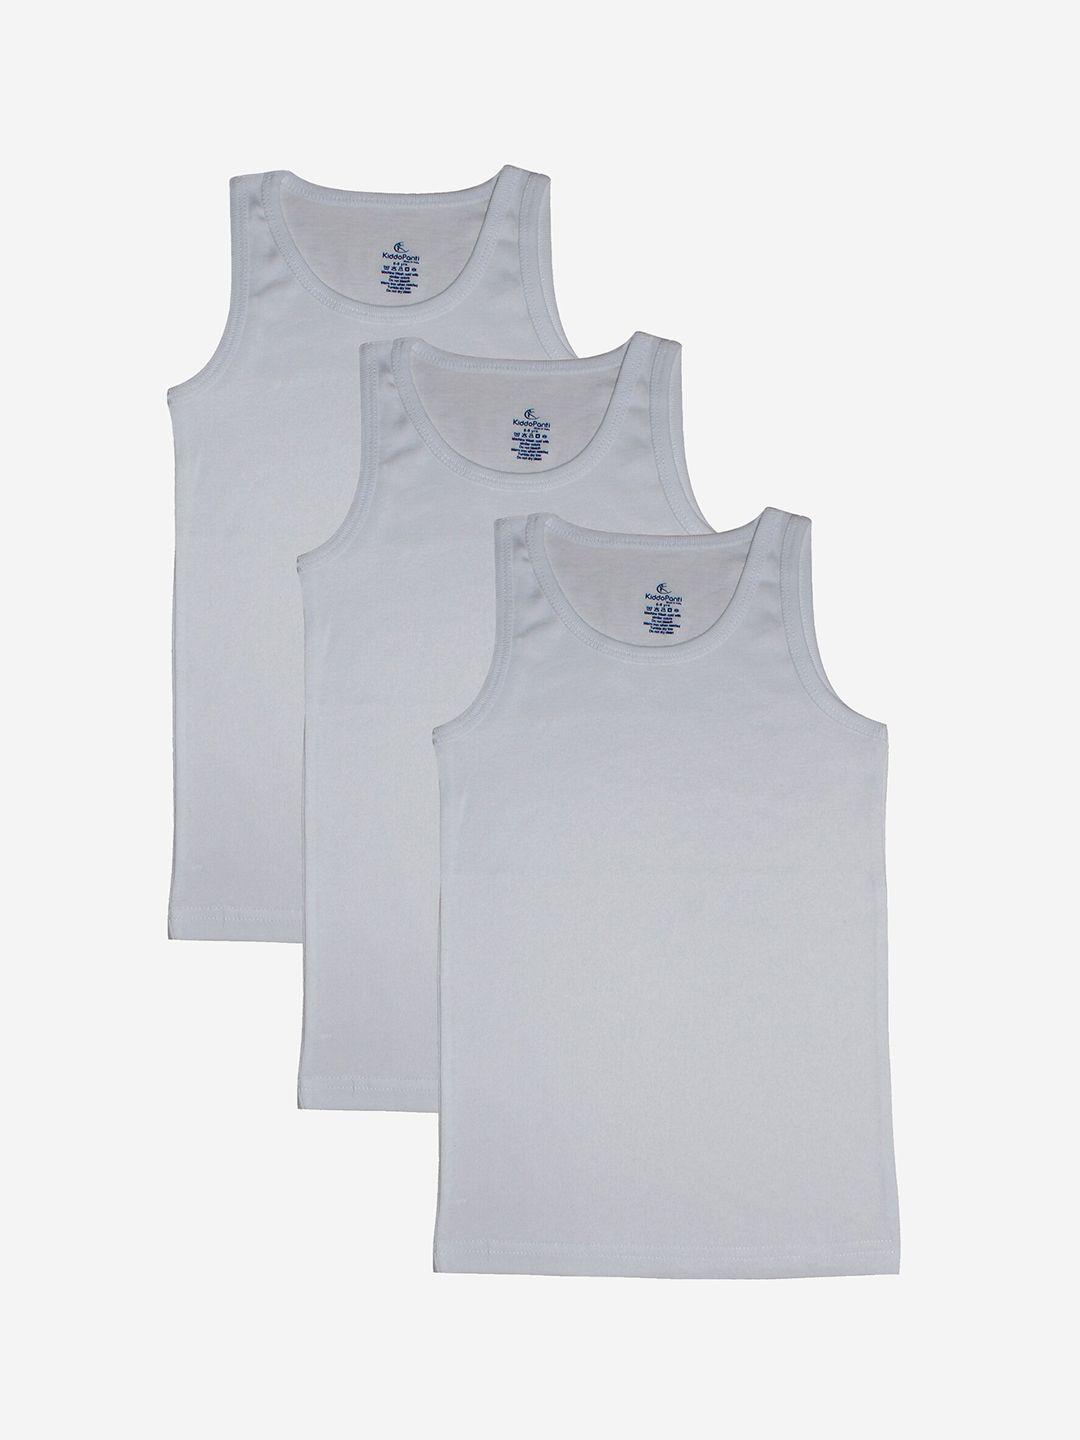 kiddopanti boys white pack of 3 solid innerwear vests